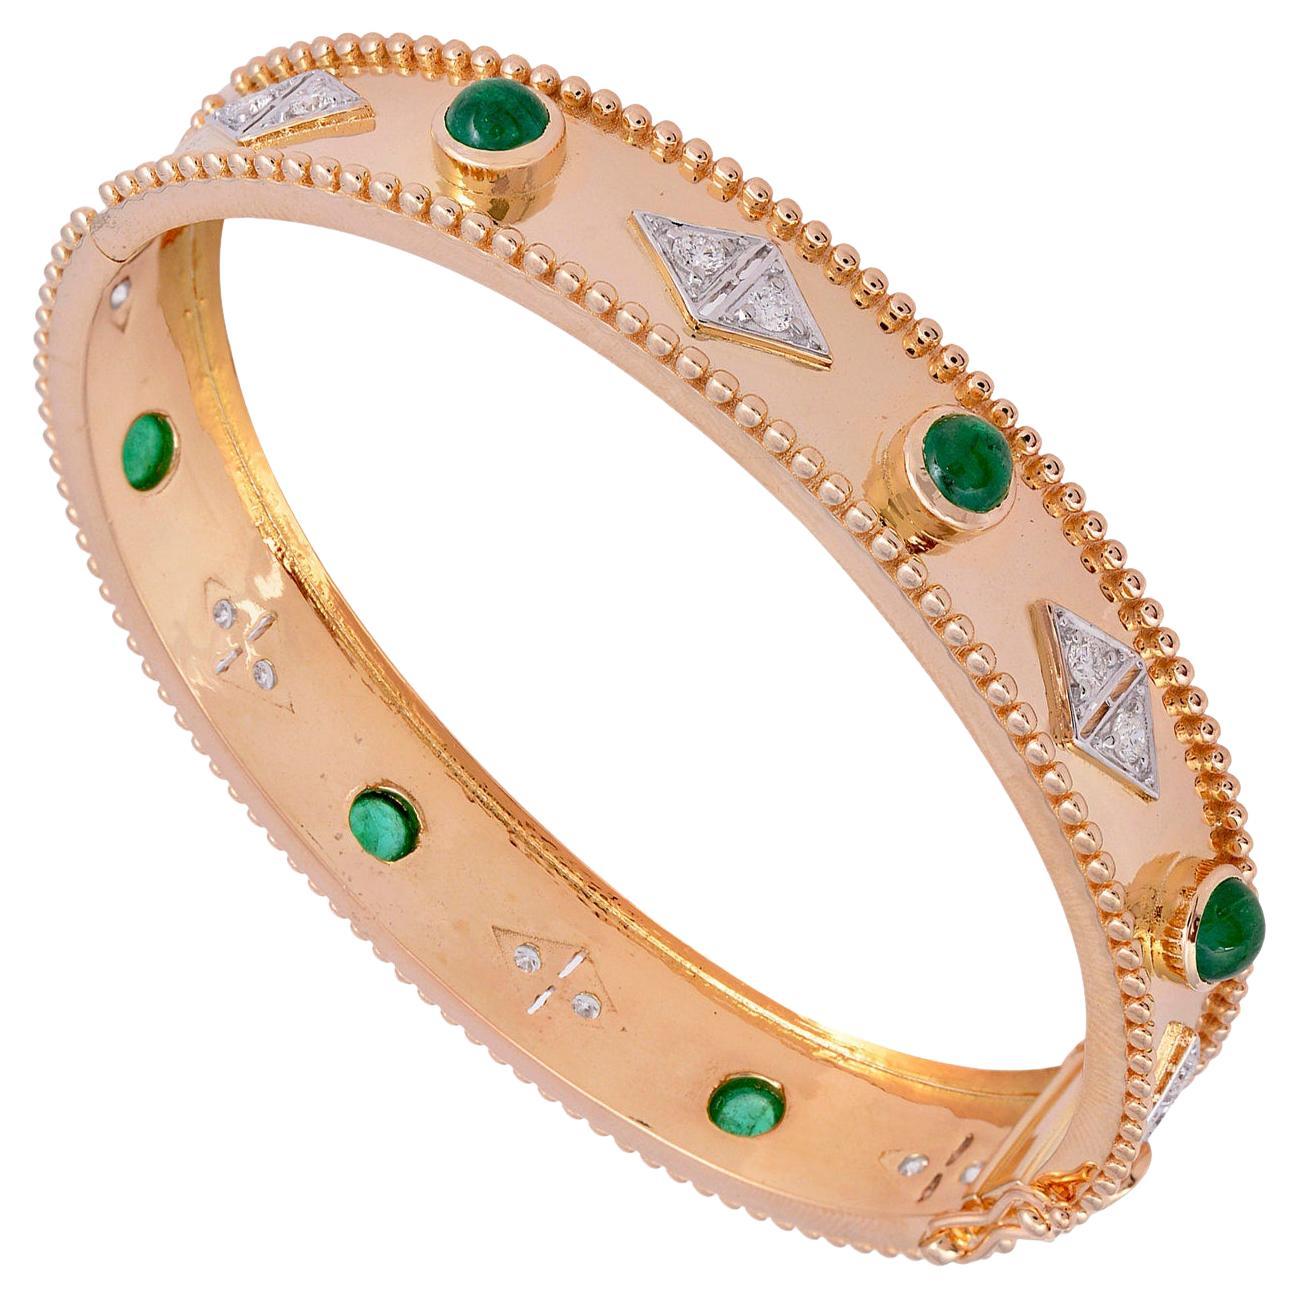 3.35 Carat Emerald Diamond 14 Karat Gold Kite Bangle Bracelet